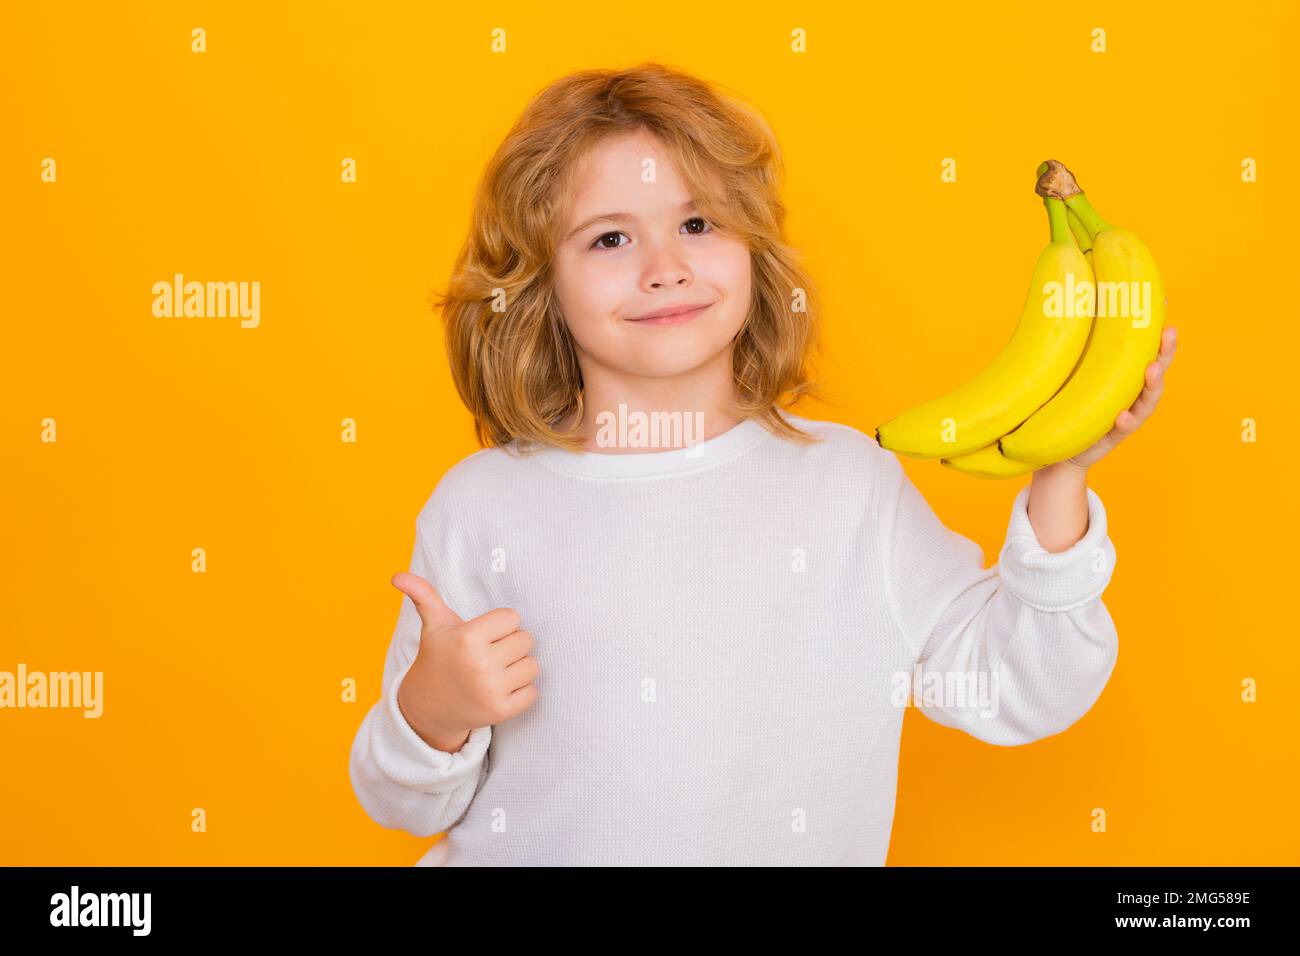 Child hold banana in studio. Studio portrait of cute kid boy with bananas isolated on yellow. Stock Photo